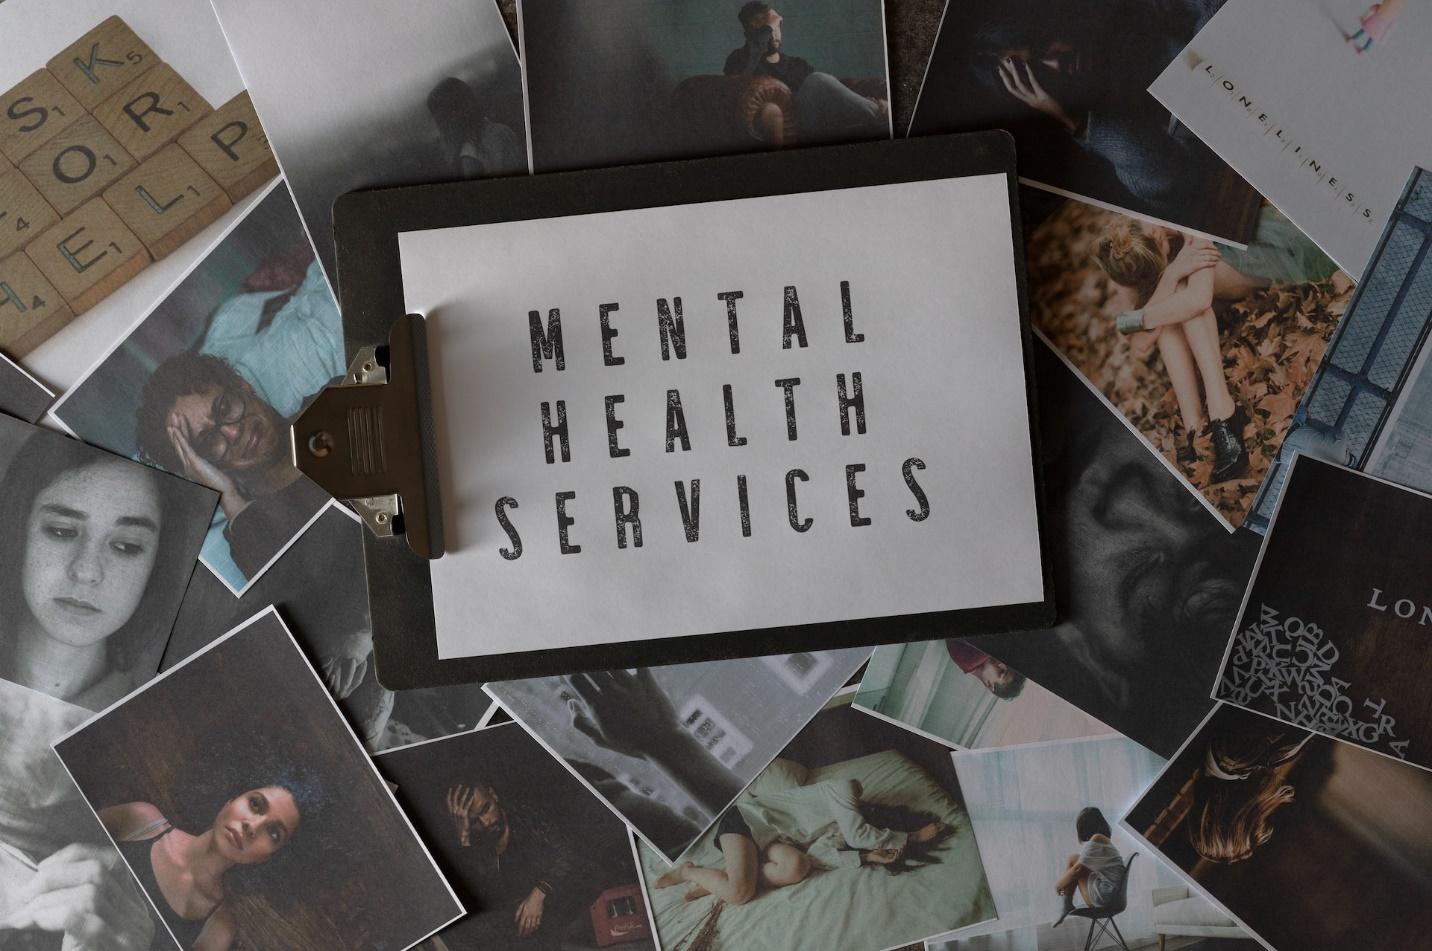 A mental health service signage alongside pictures